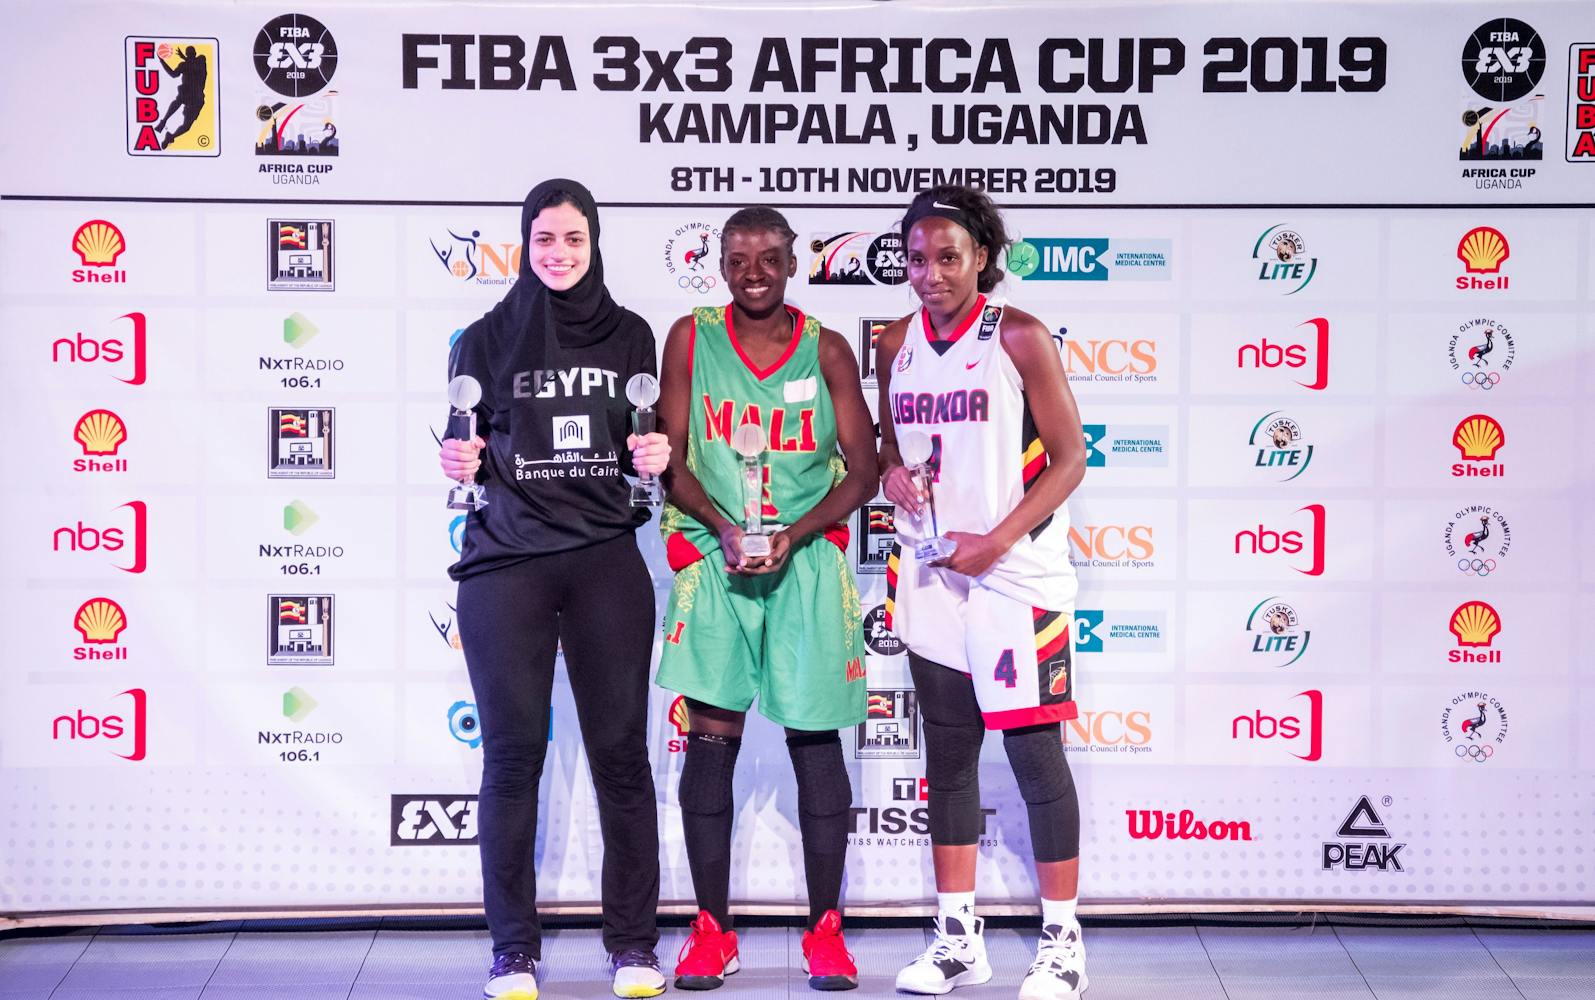 Soraya stars in FIBA 3x3 Africa Cup Women's Team of the Tournament